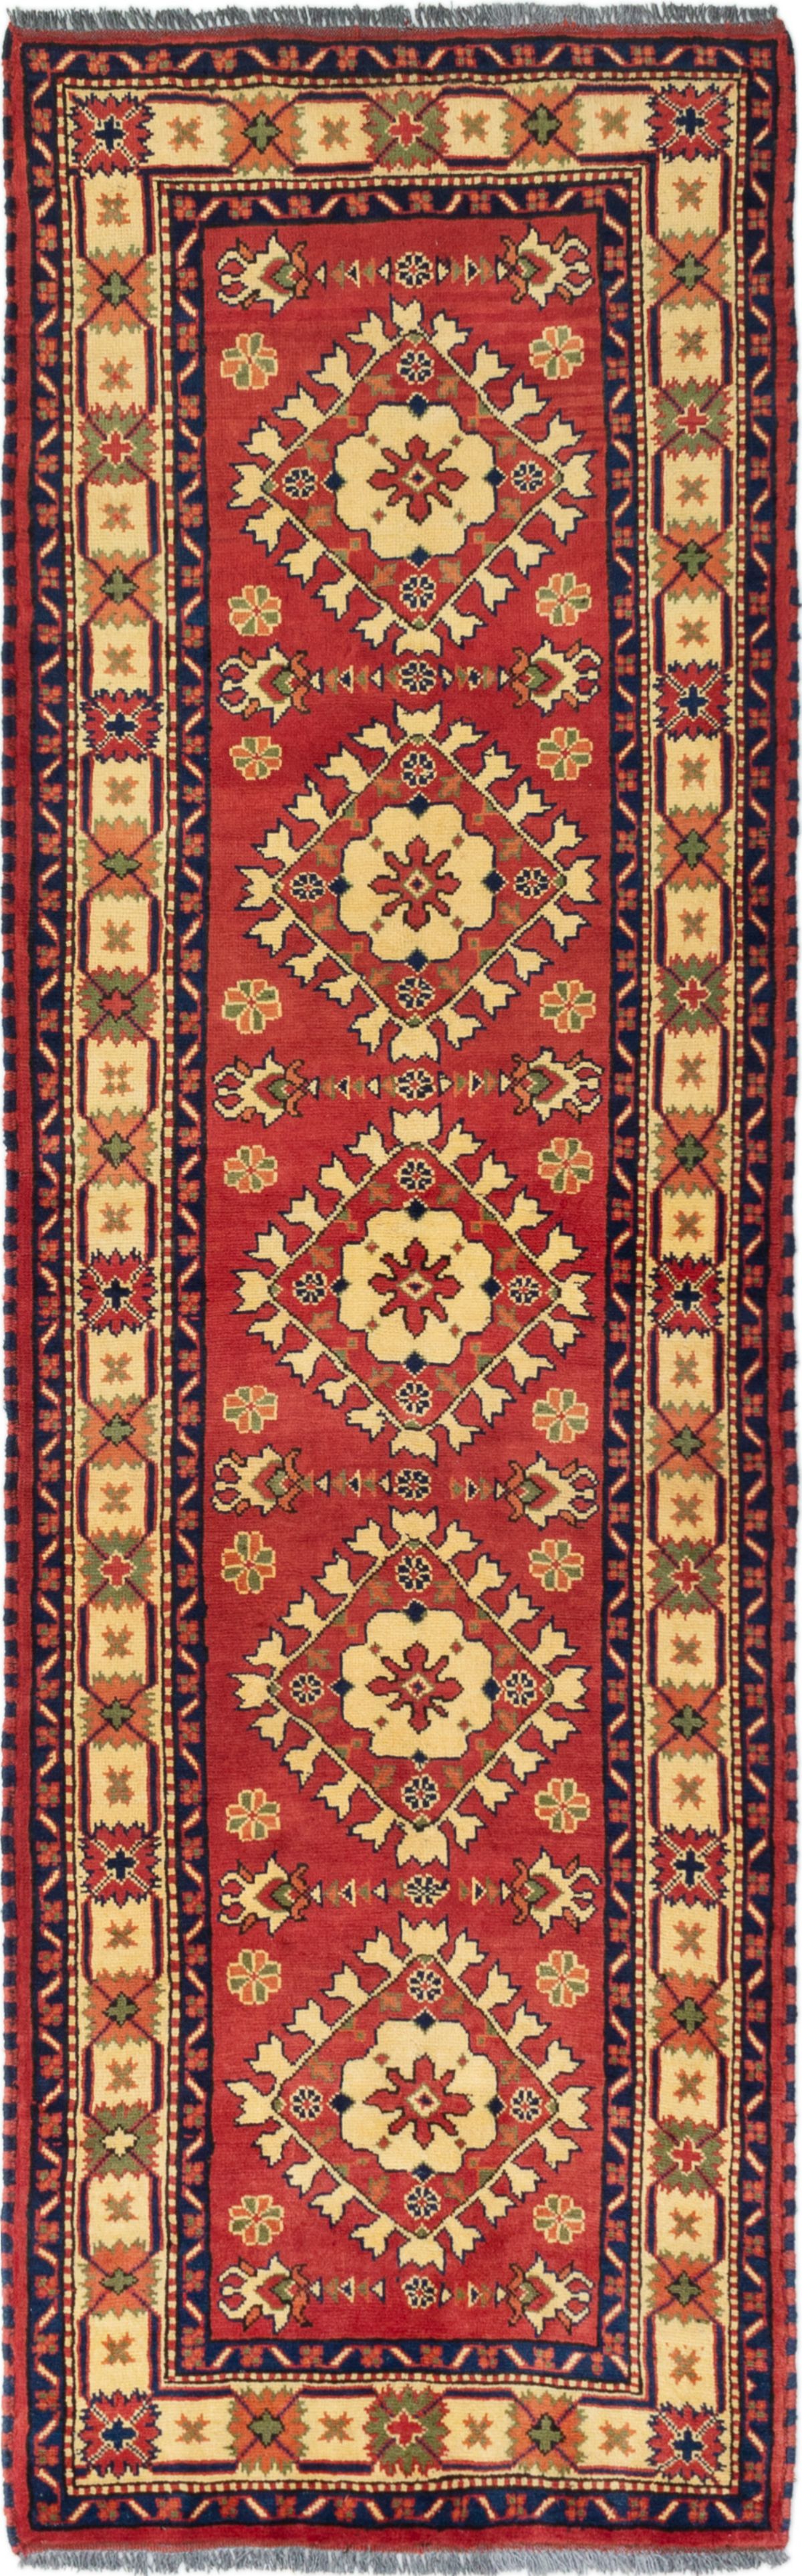 Hand-knotted Finest Kargahi Dark Copper Wool Rug 2'8" x 8'8" Size: 2'8" x 8'8"  